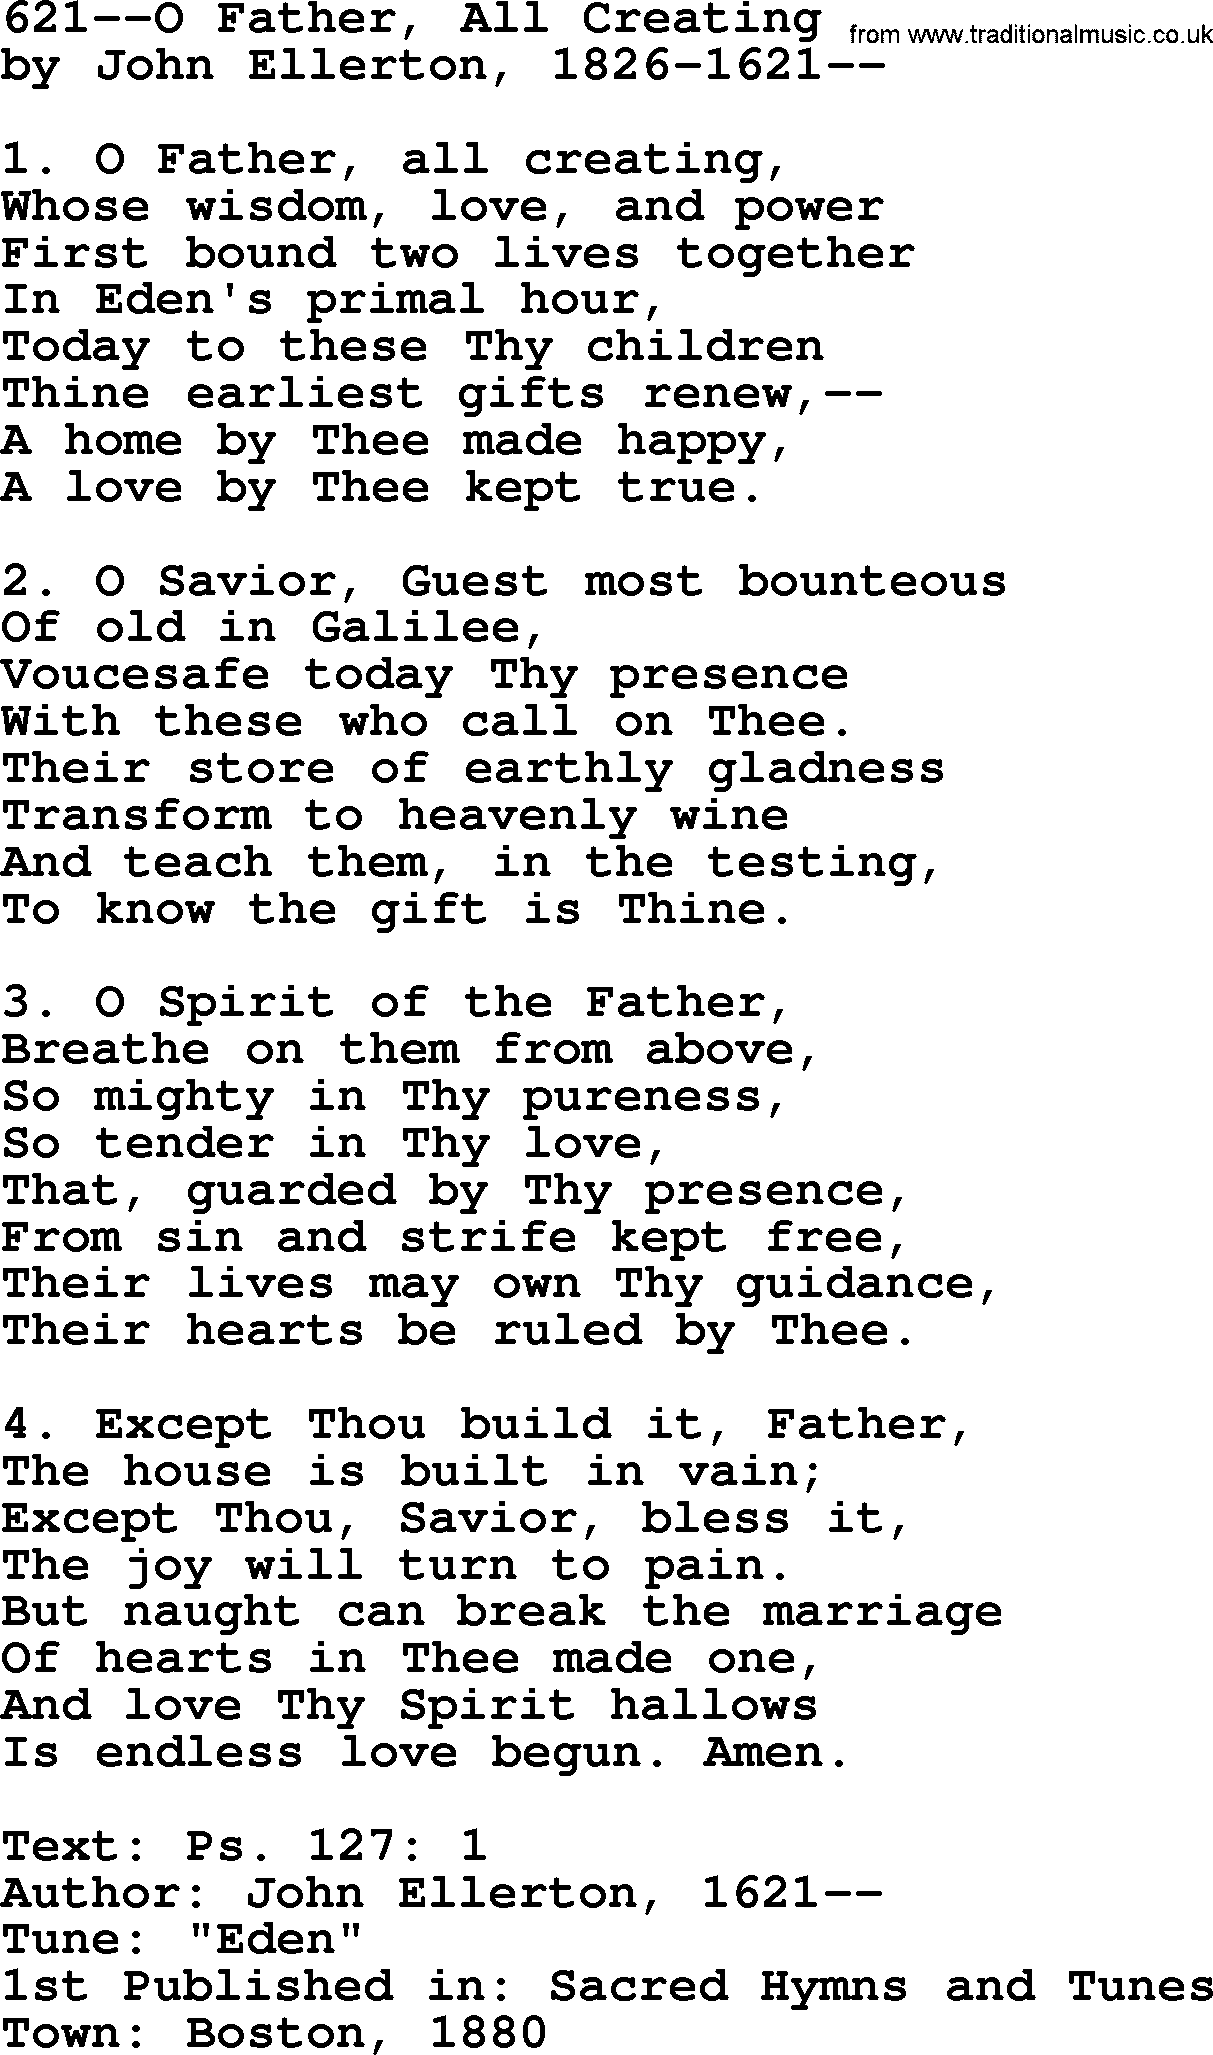 Lutheran Hymn: 621--O Father, All Creating.txt lyrics with PDF